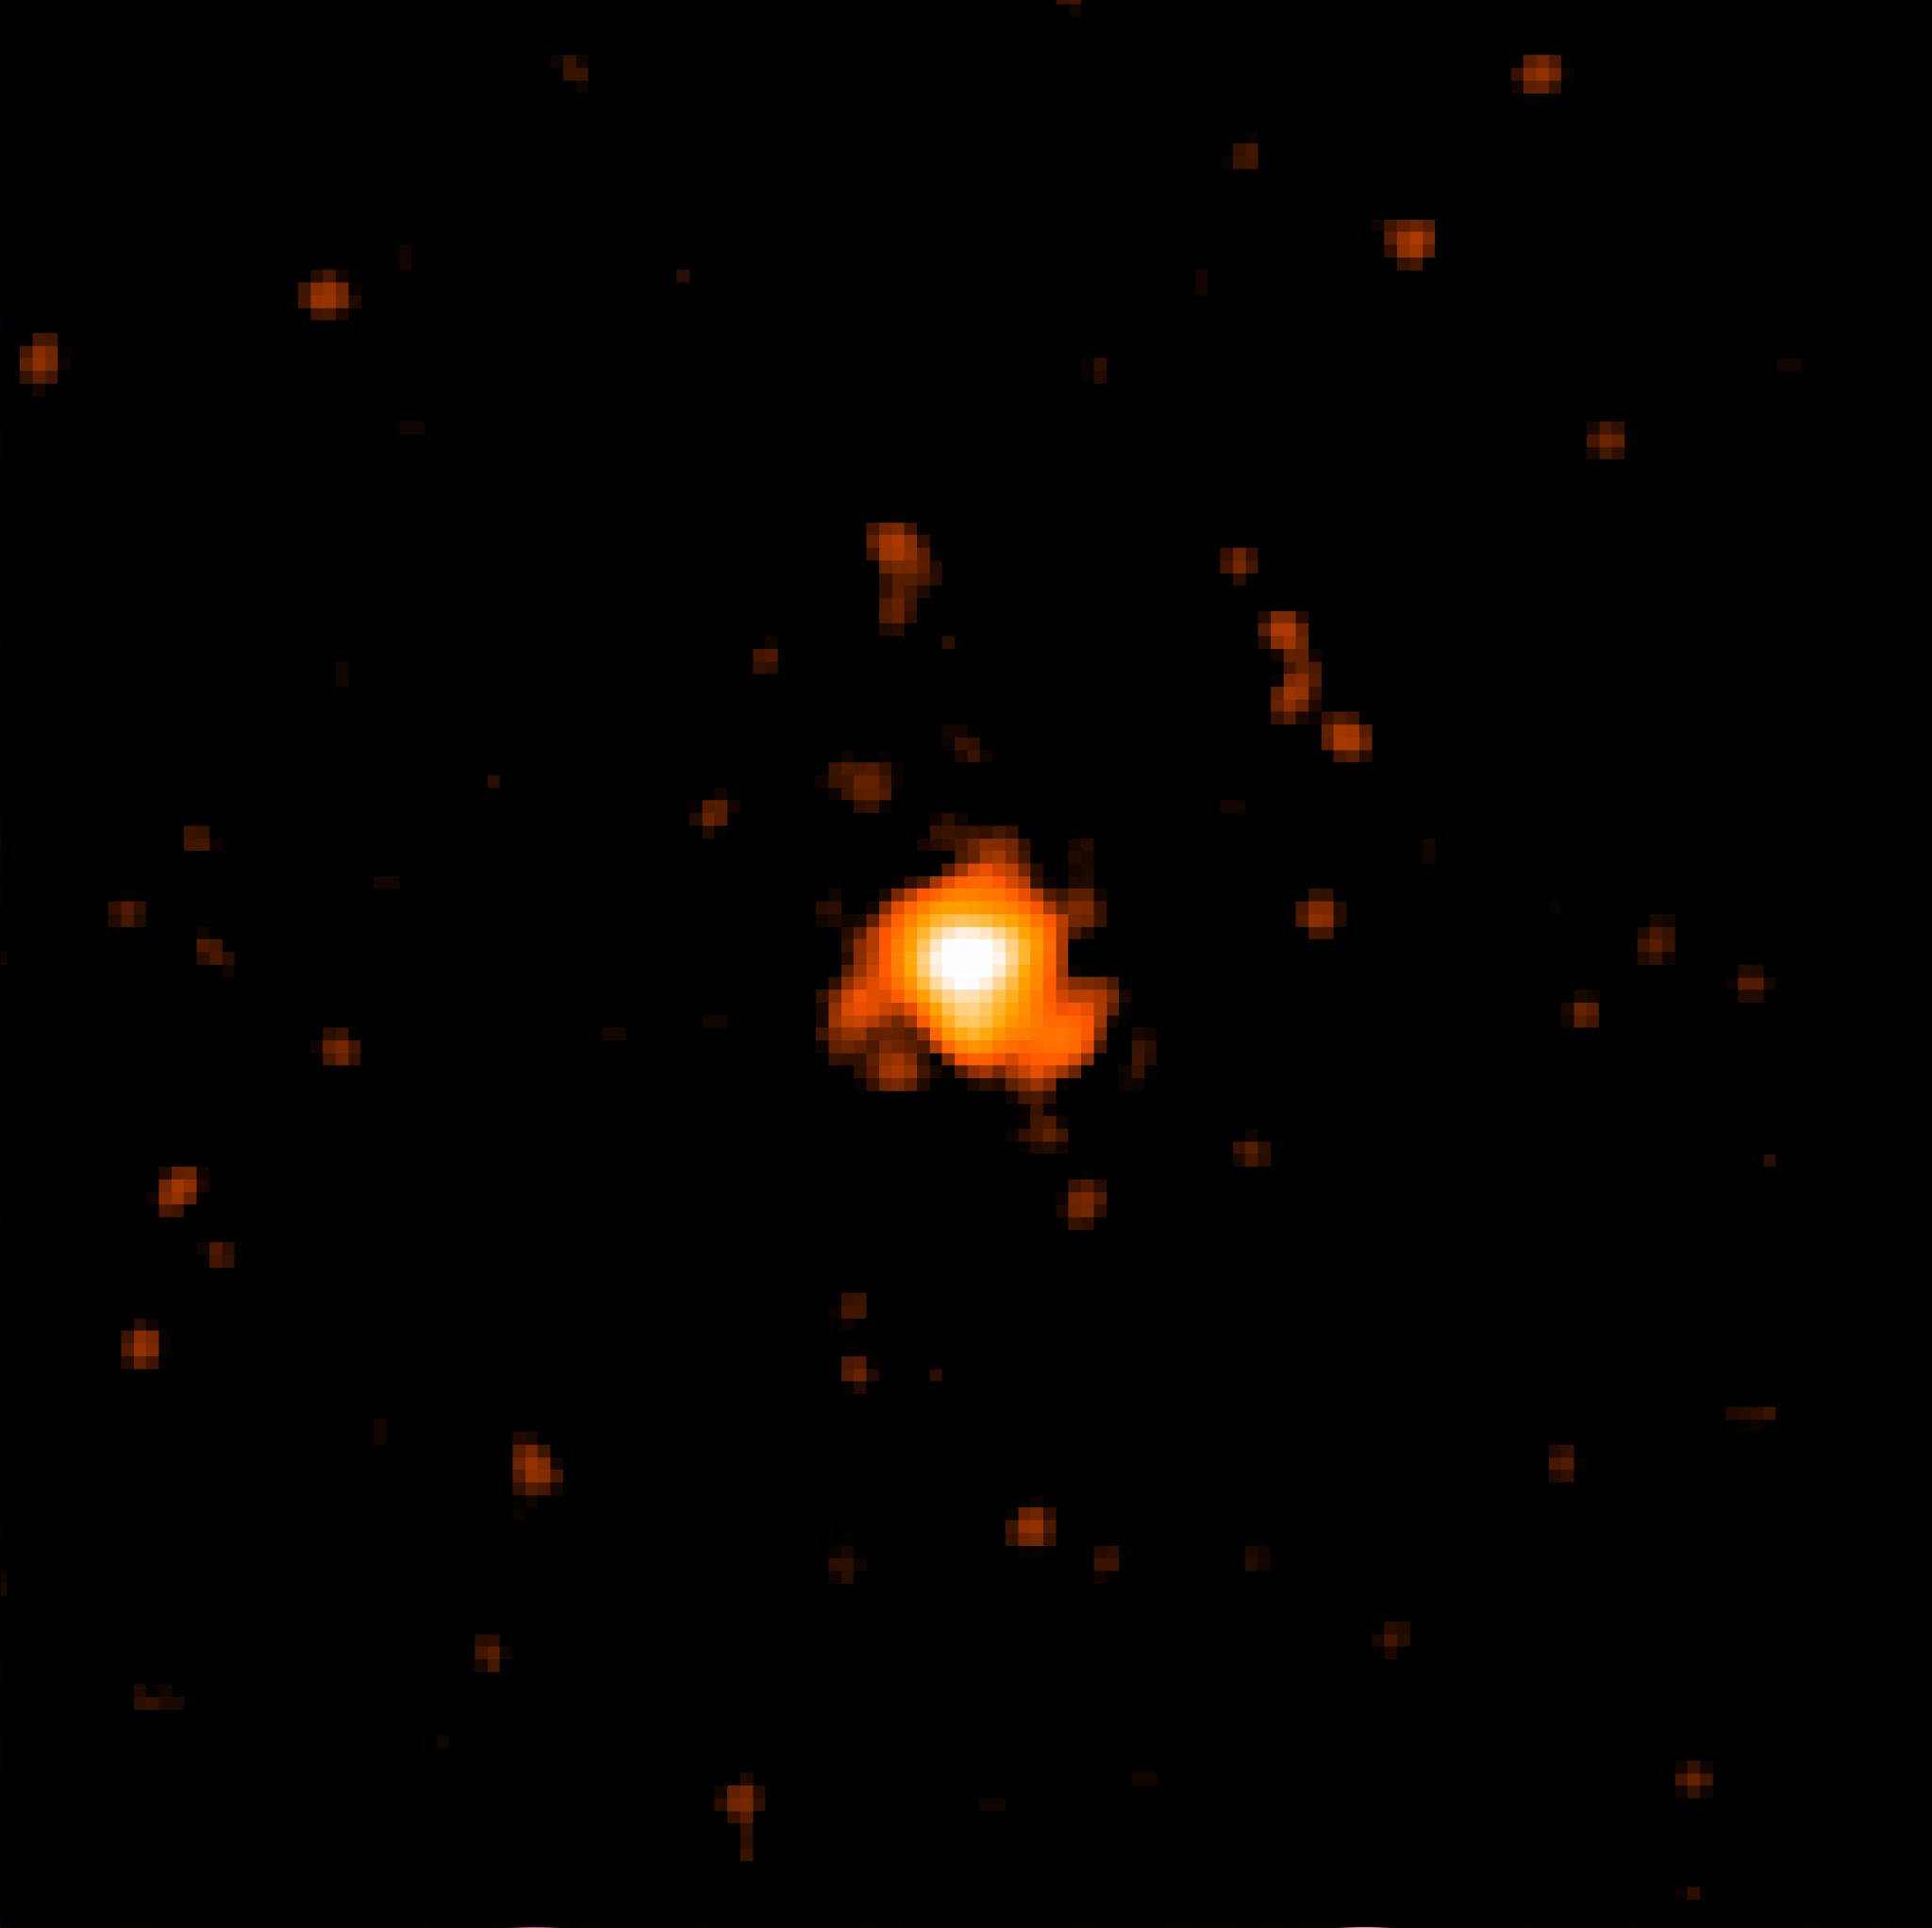 X-ray image of HD 189733 from NASA's Swift